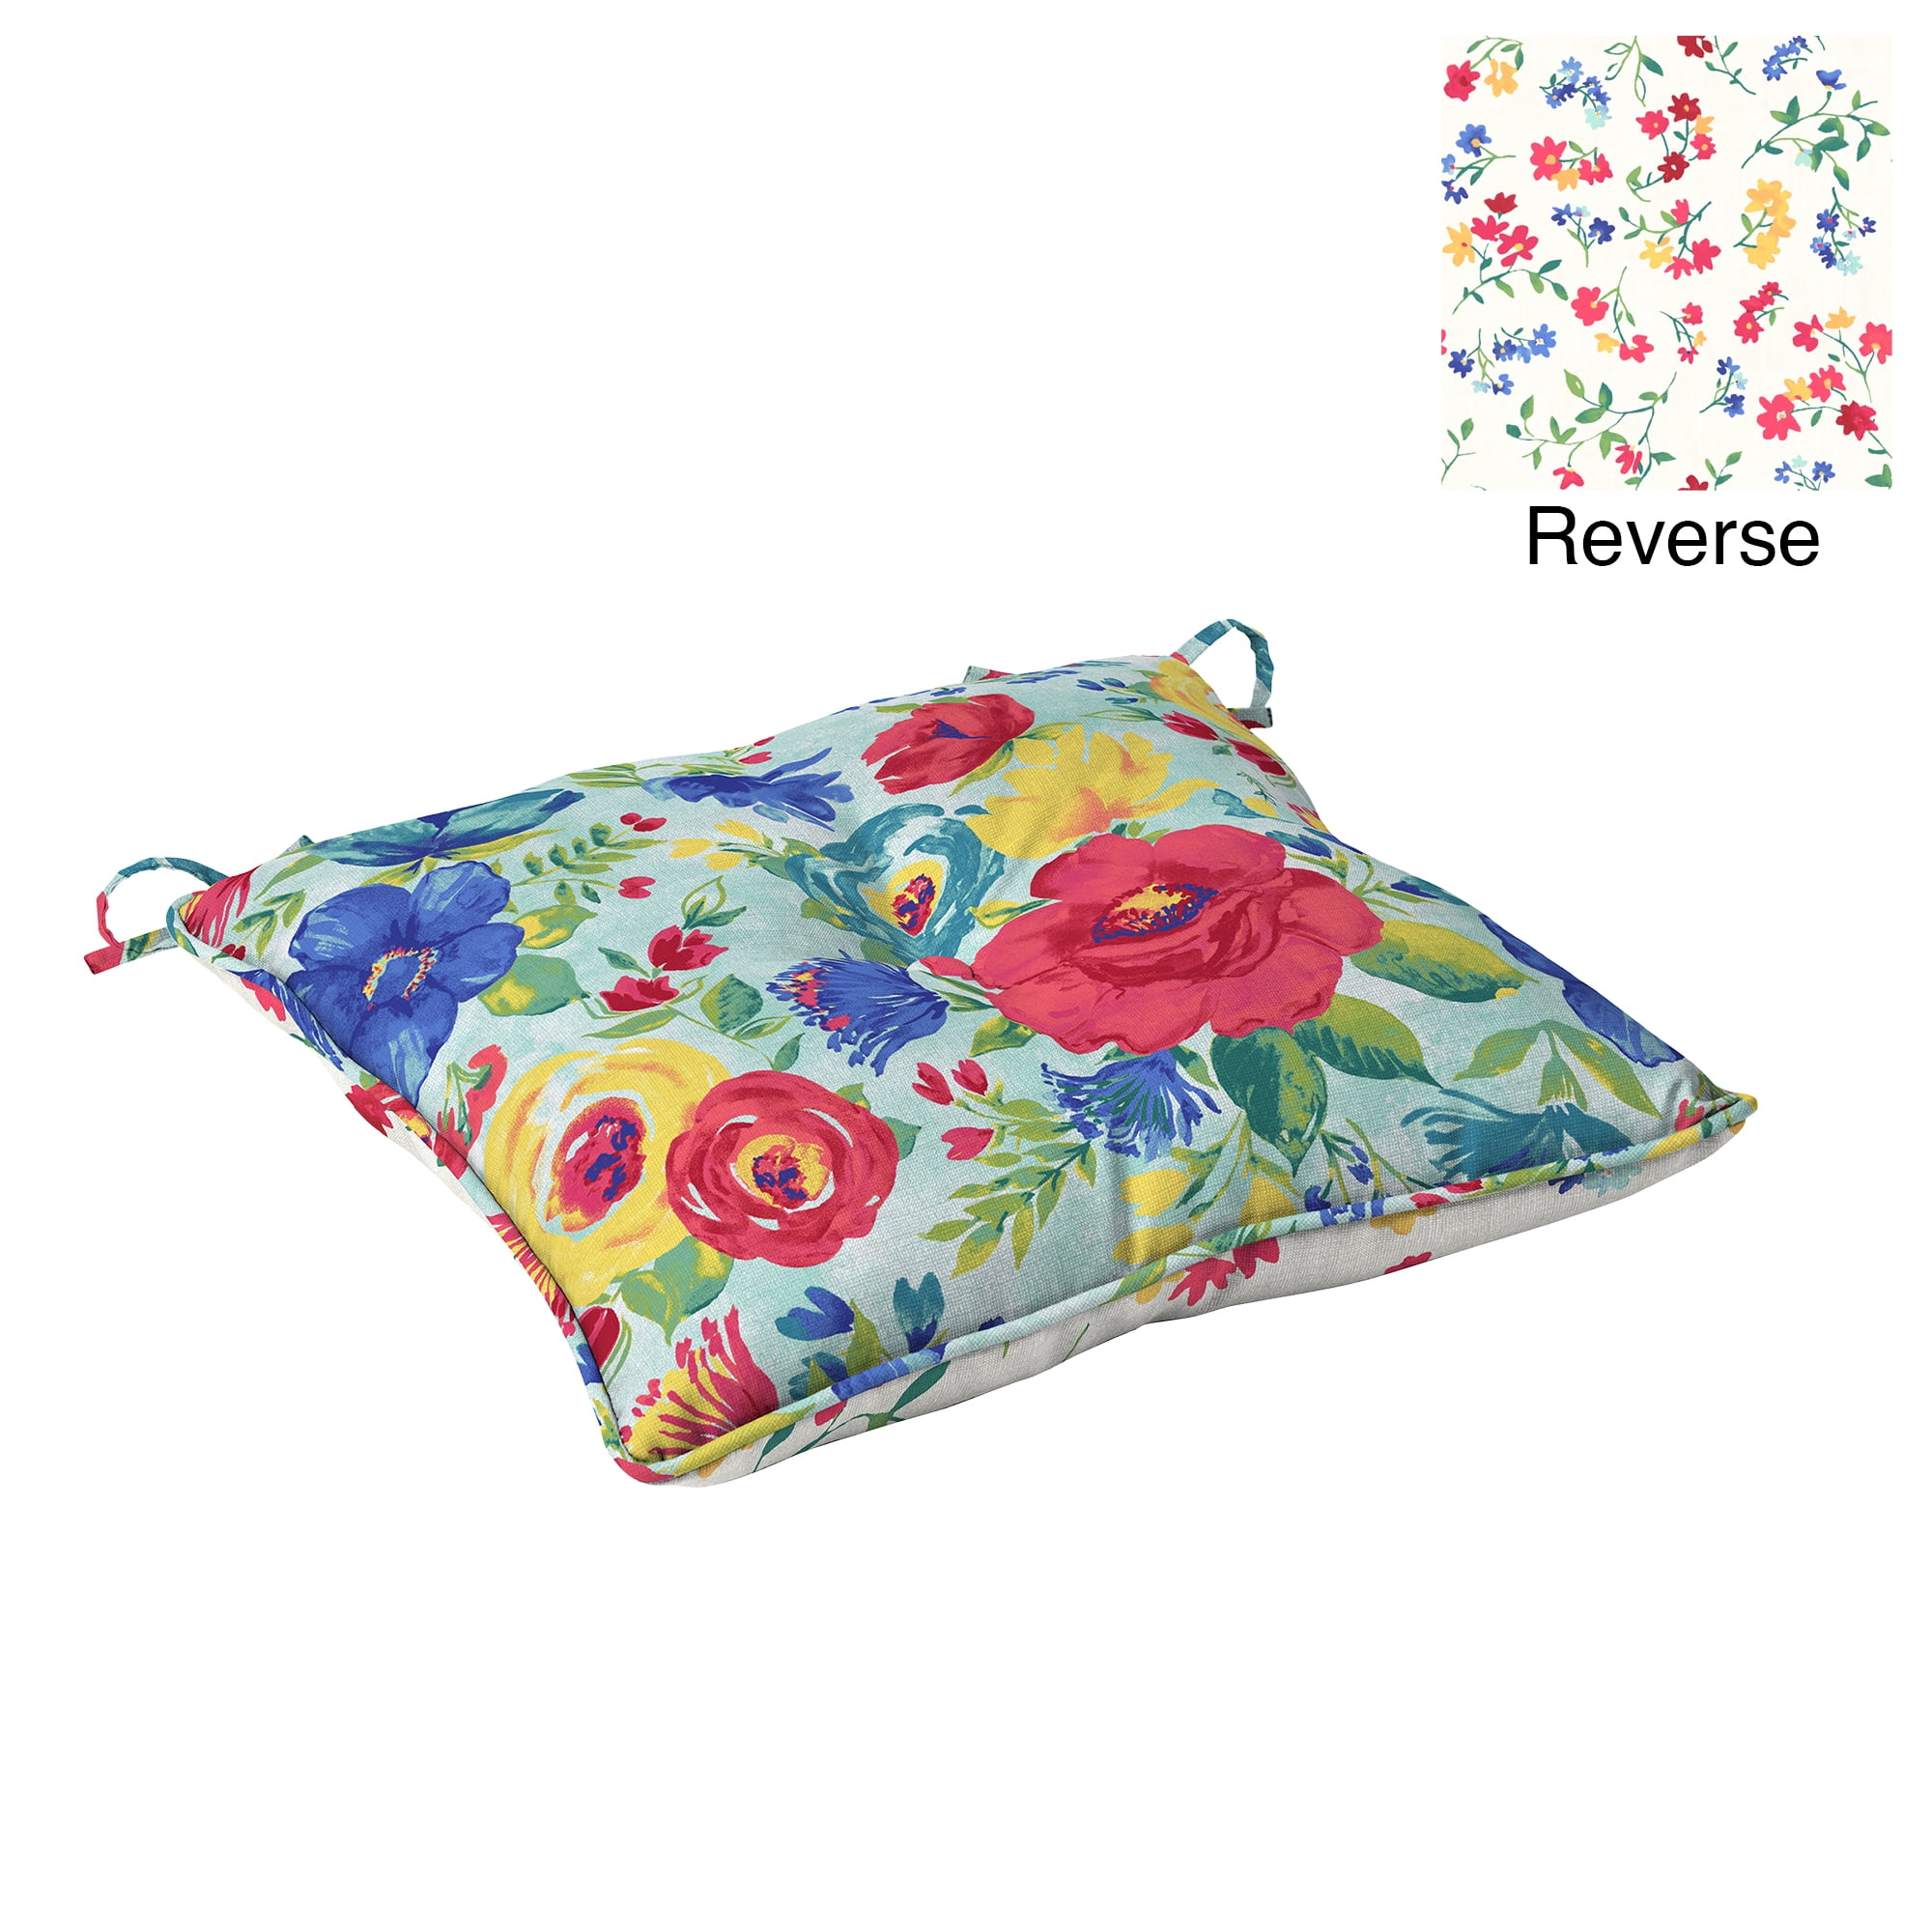 Capri Floral Print Decorative Pillow